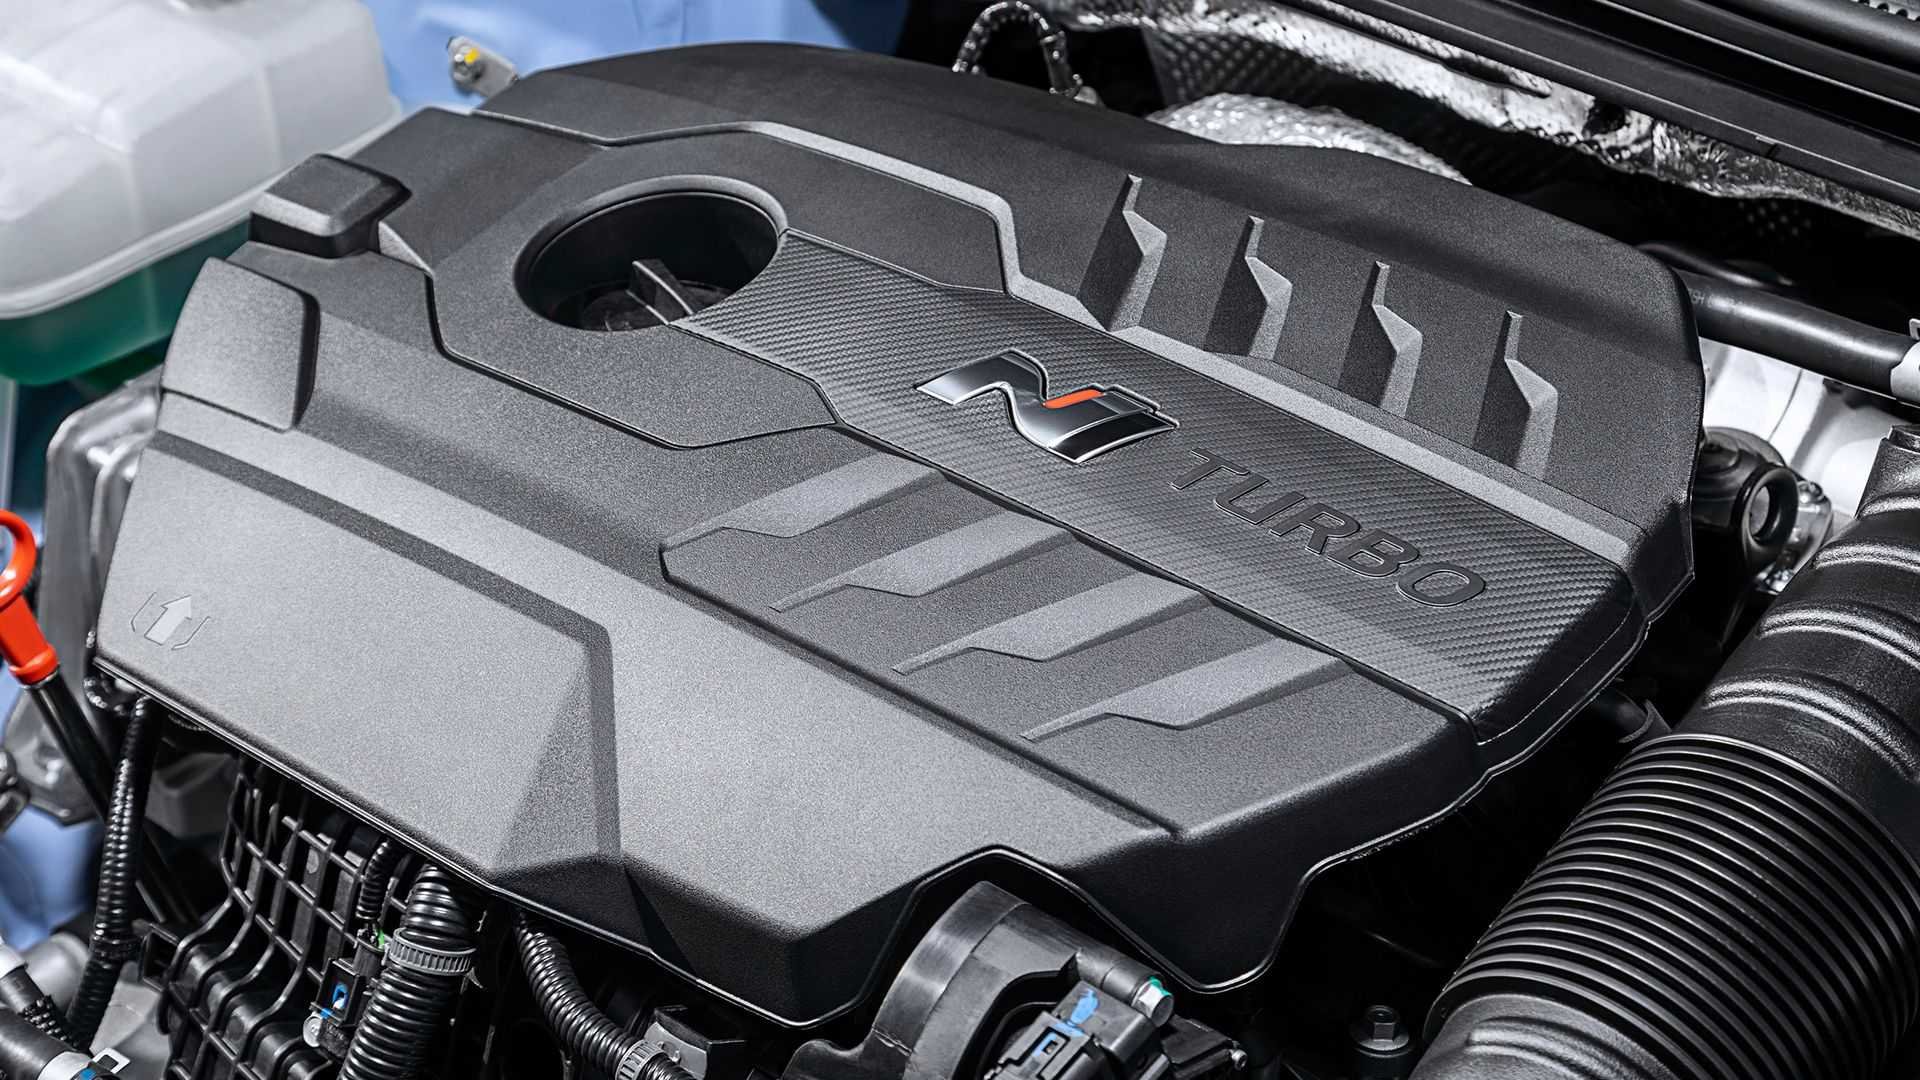 Hyundai Working On 2.3-Liter Turbo Engine With 7,000 RPM Redline